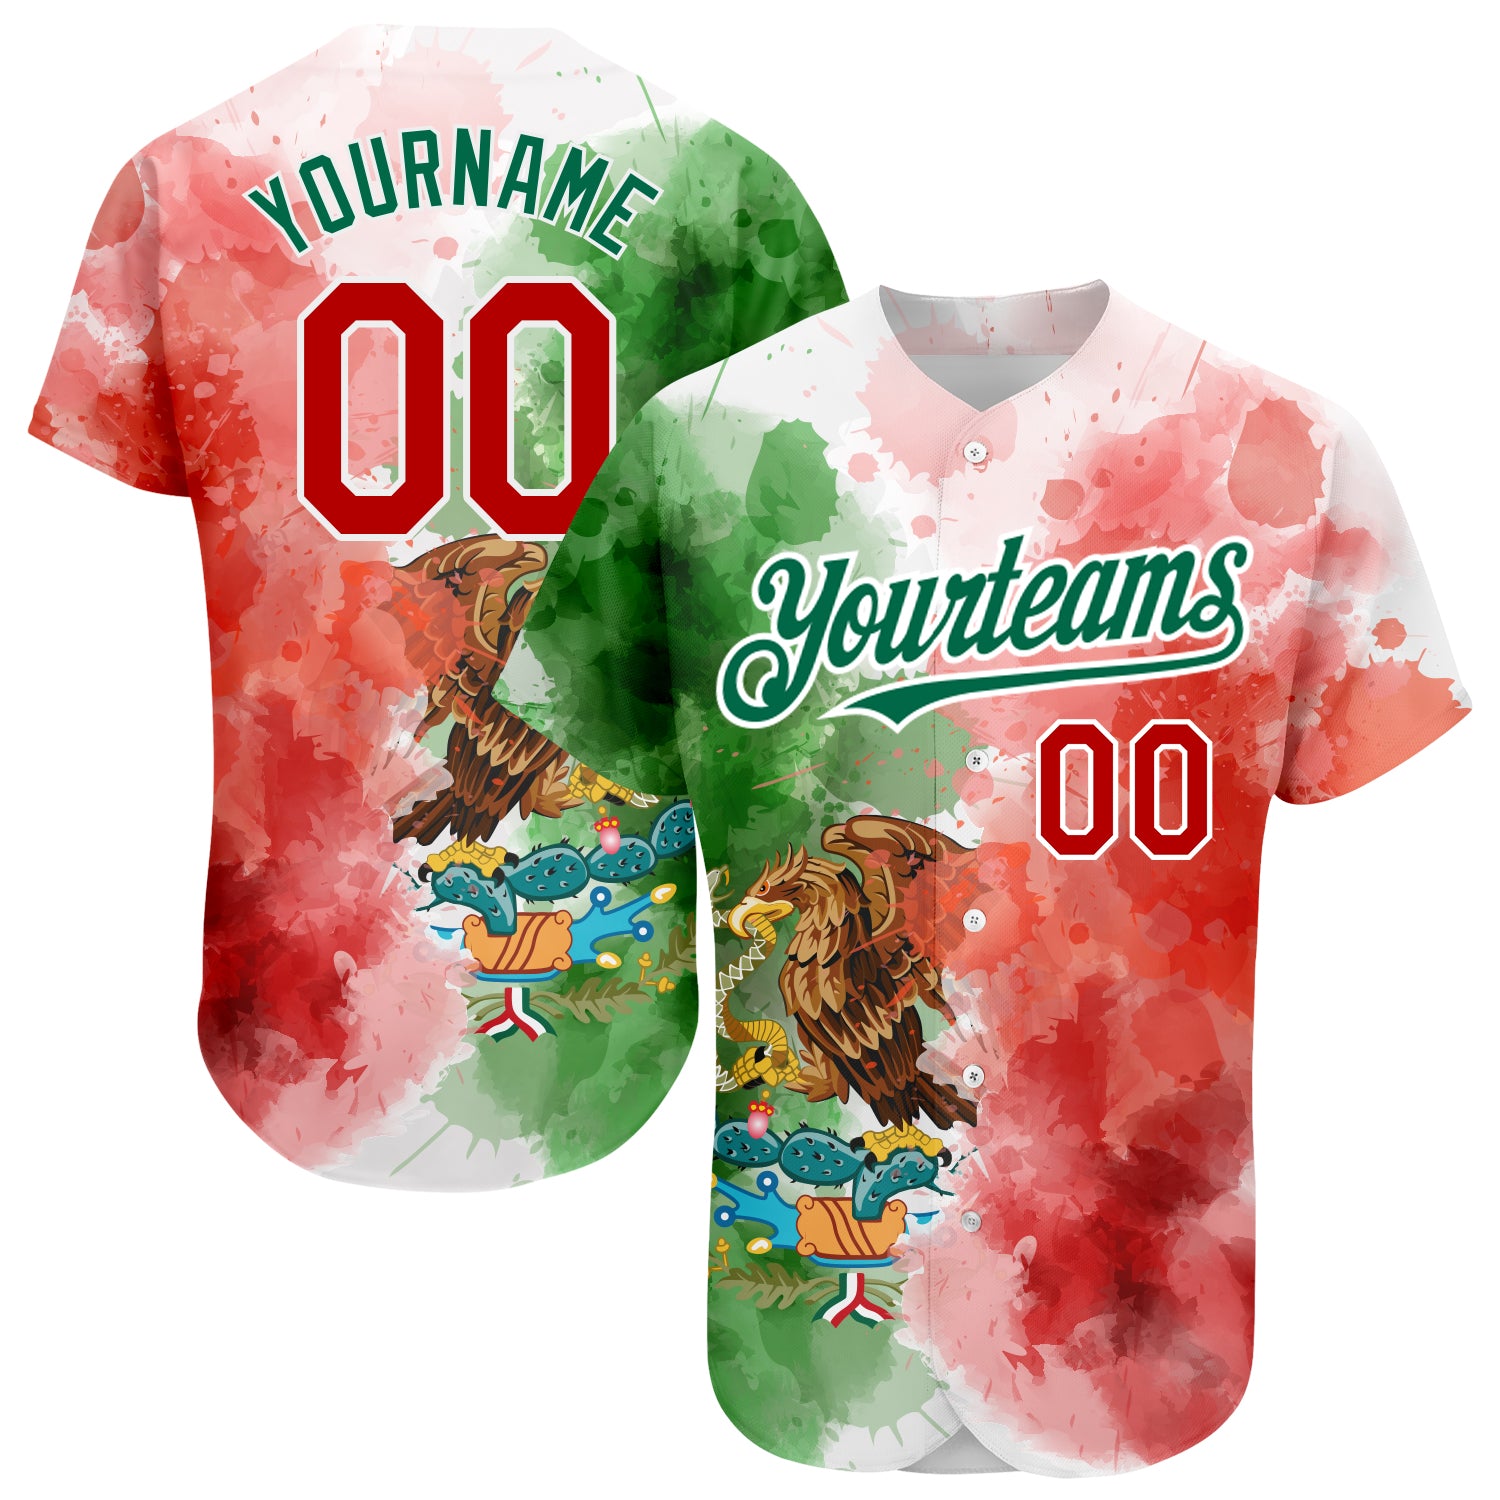 design custom baseball jersey